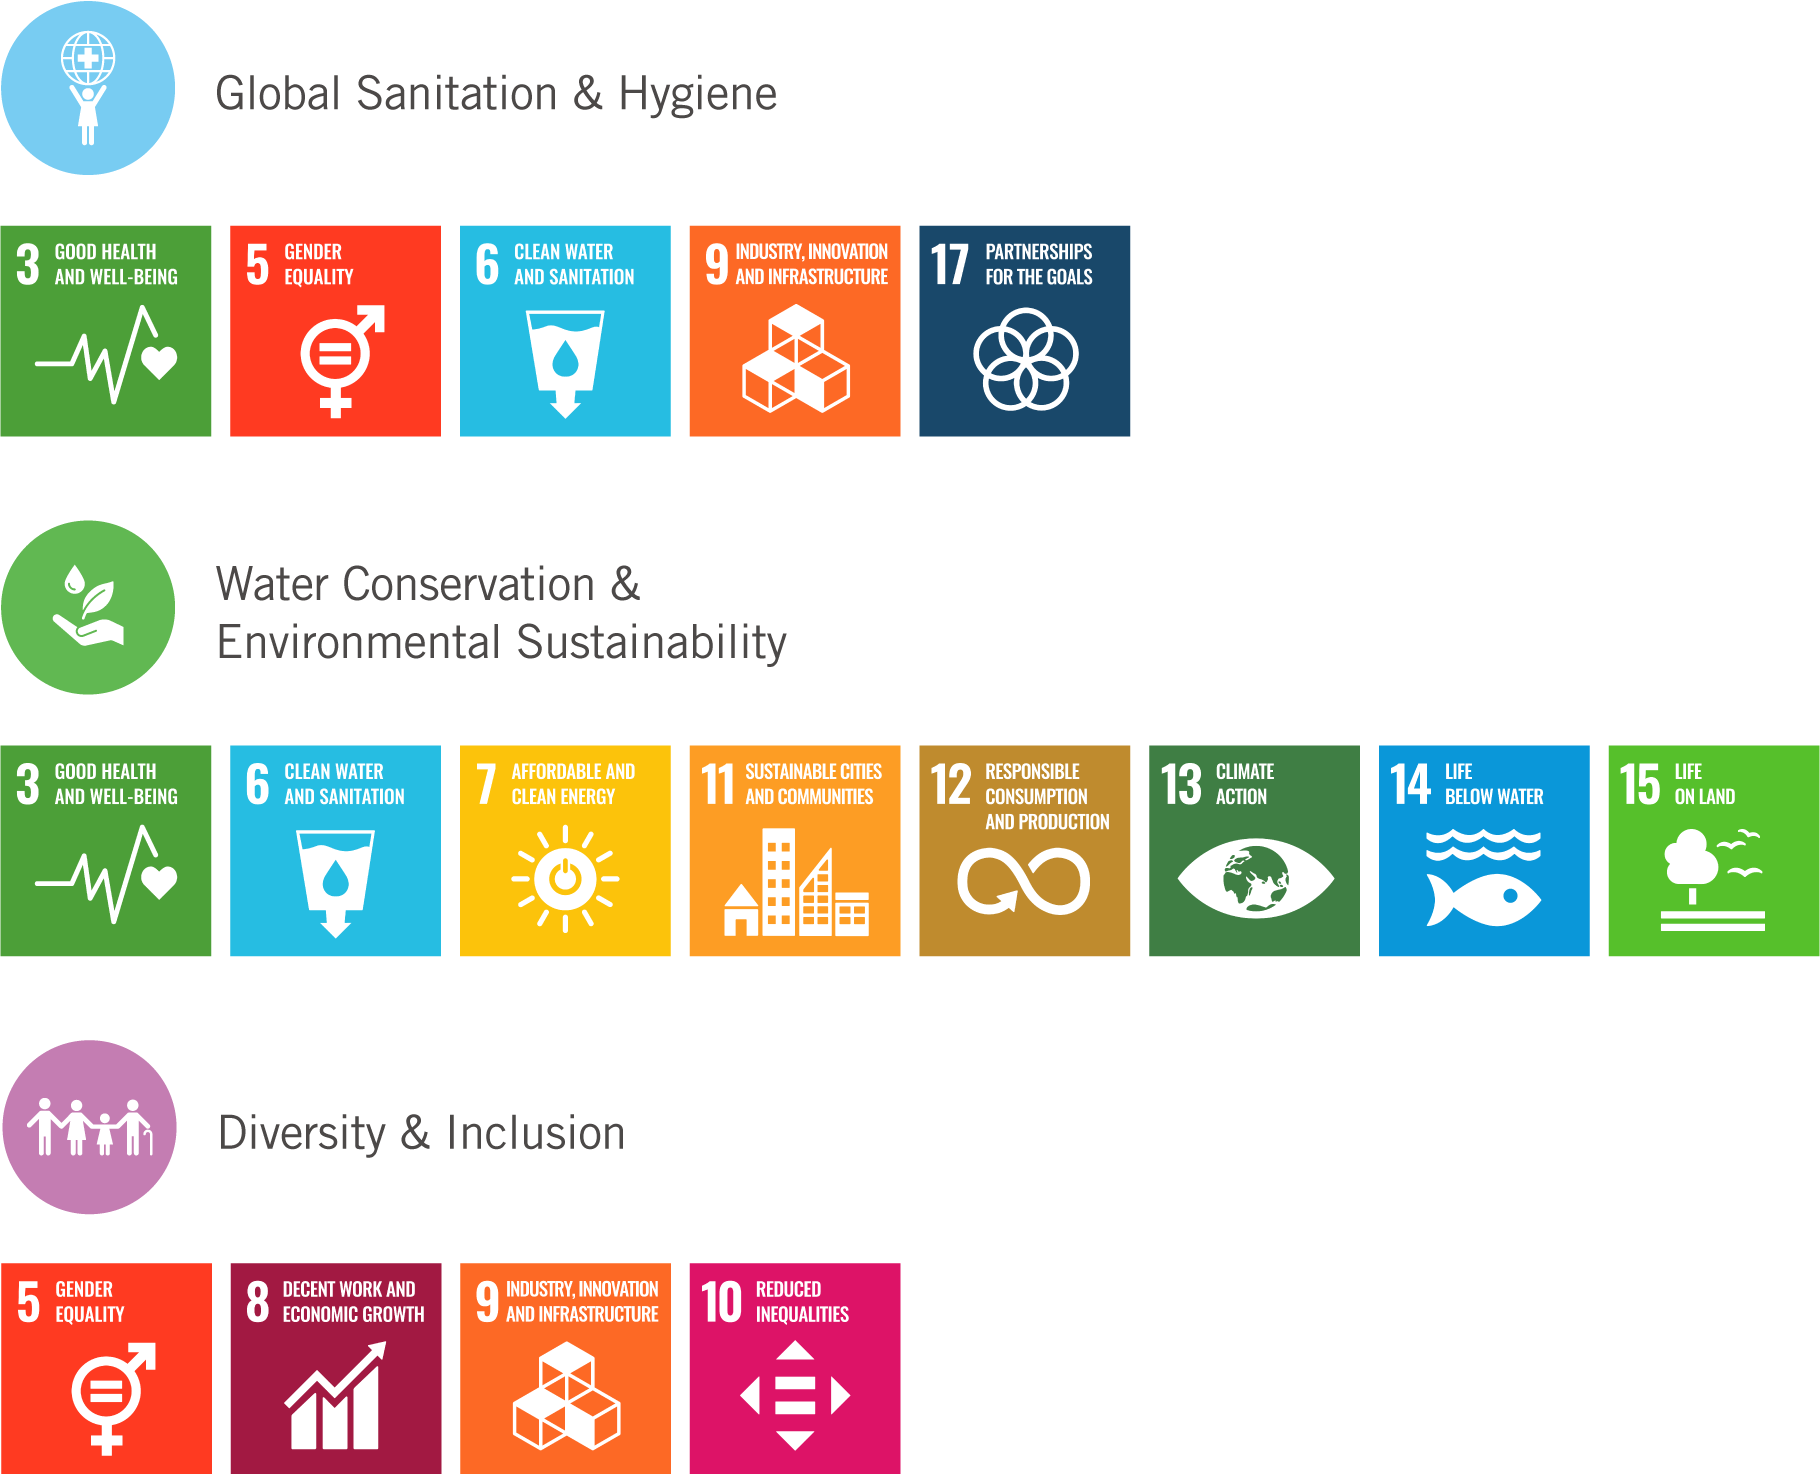 SDGs relating three strategic pillars: Global Sanitation & Hygiene (Goals 3, 5, 6, 9, 17), Water Conservation & Environmental Sustainability (Goals 3, 6, 7, 11, 12, 13, 14, 15), Diversity & Inclusion (Goals 5, 8, 9, 10)